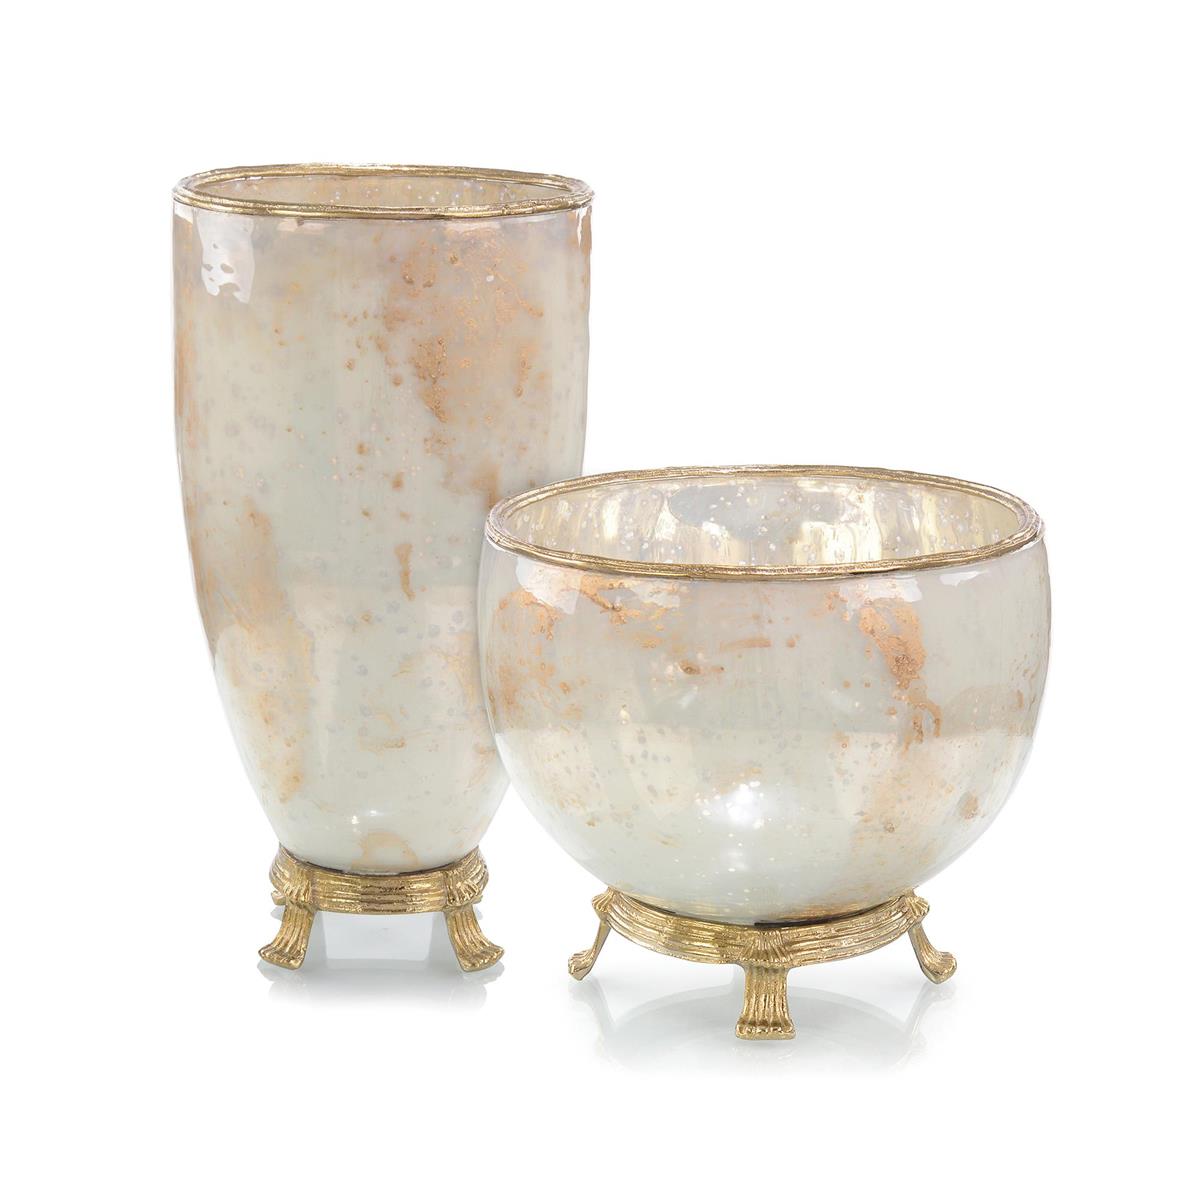 Simply Classic Pearlized Vase & Bowl-John Richard-JR-JRA-11562-DecorVase-3-France and Son